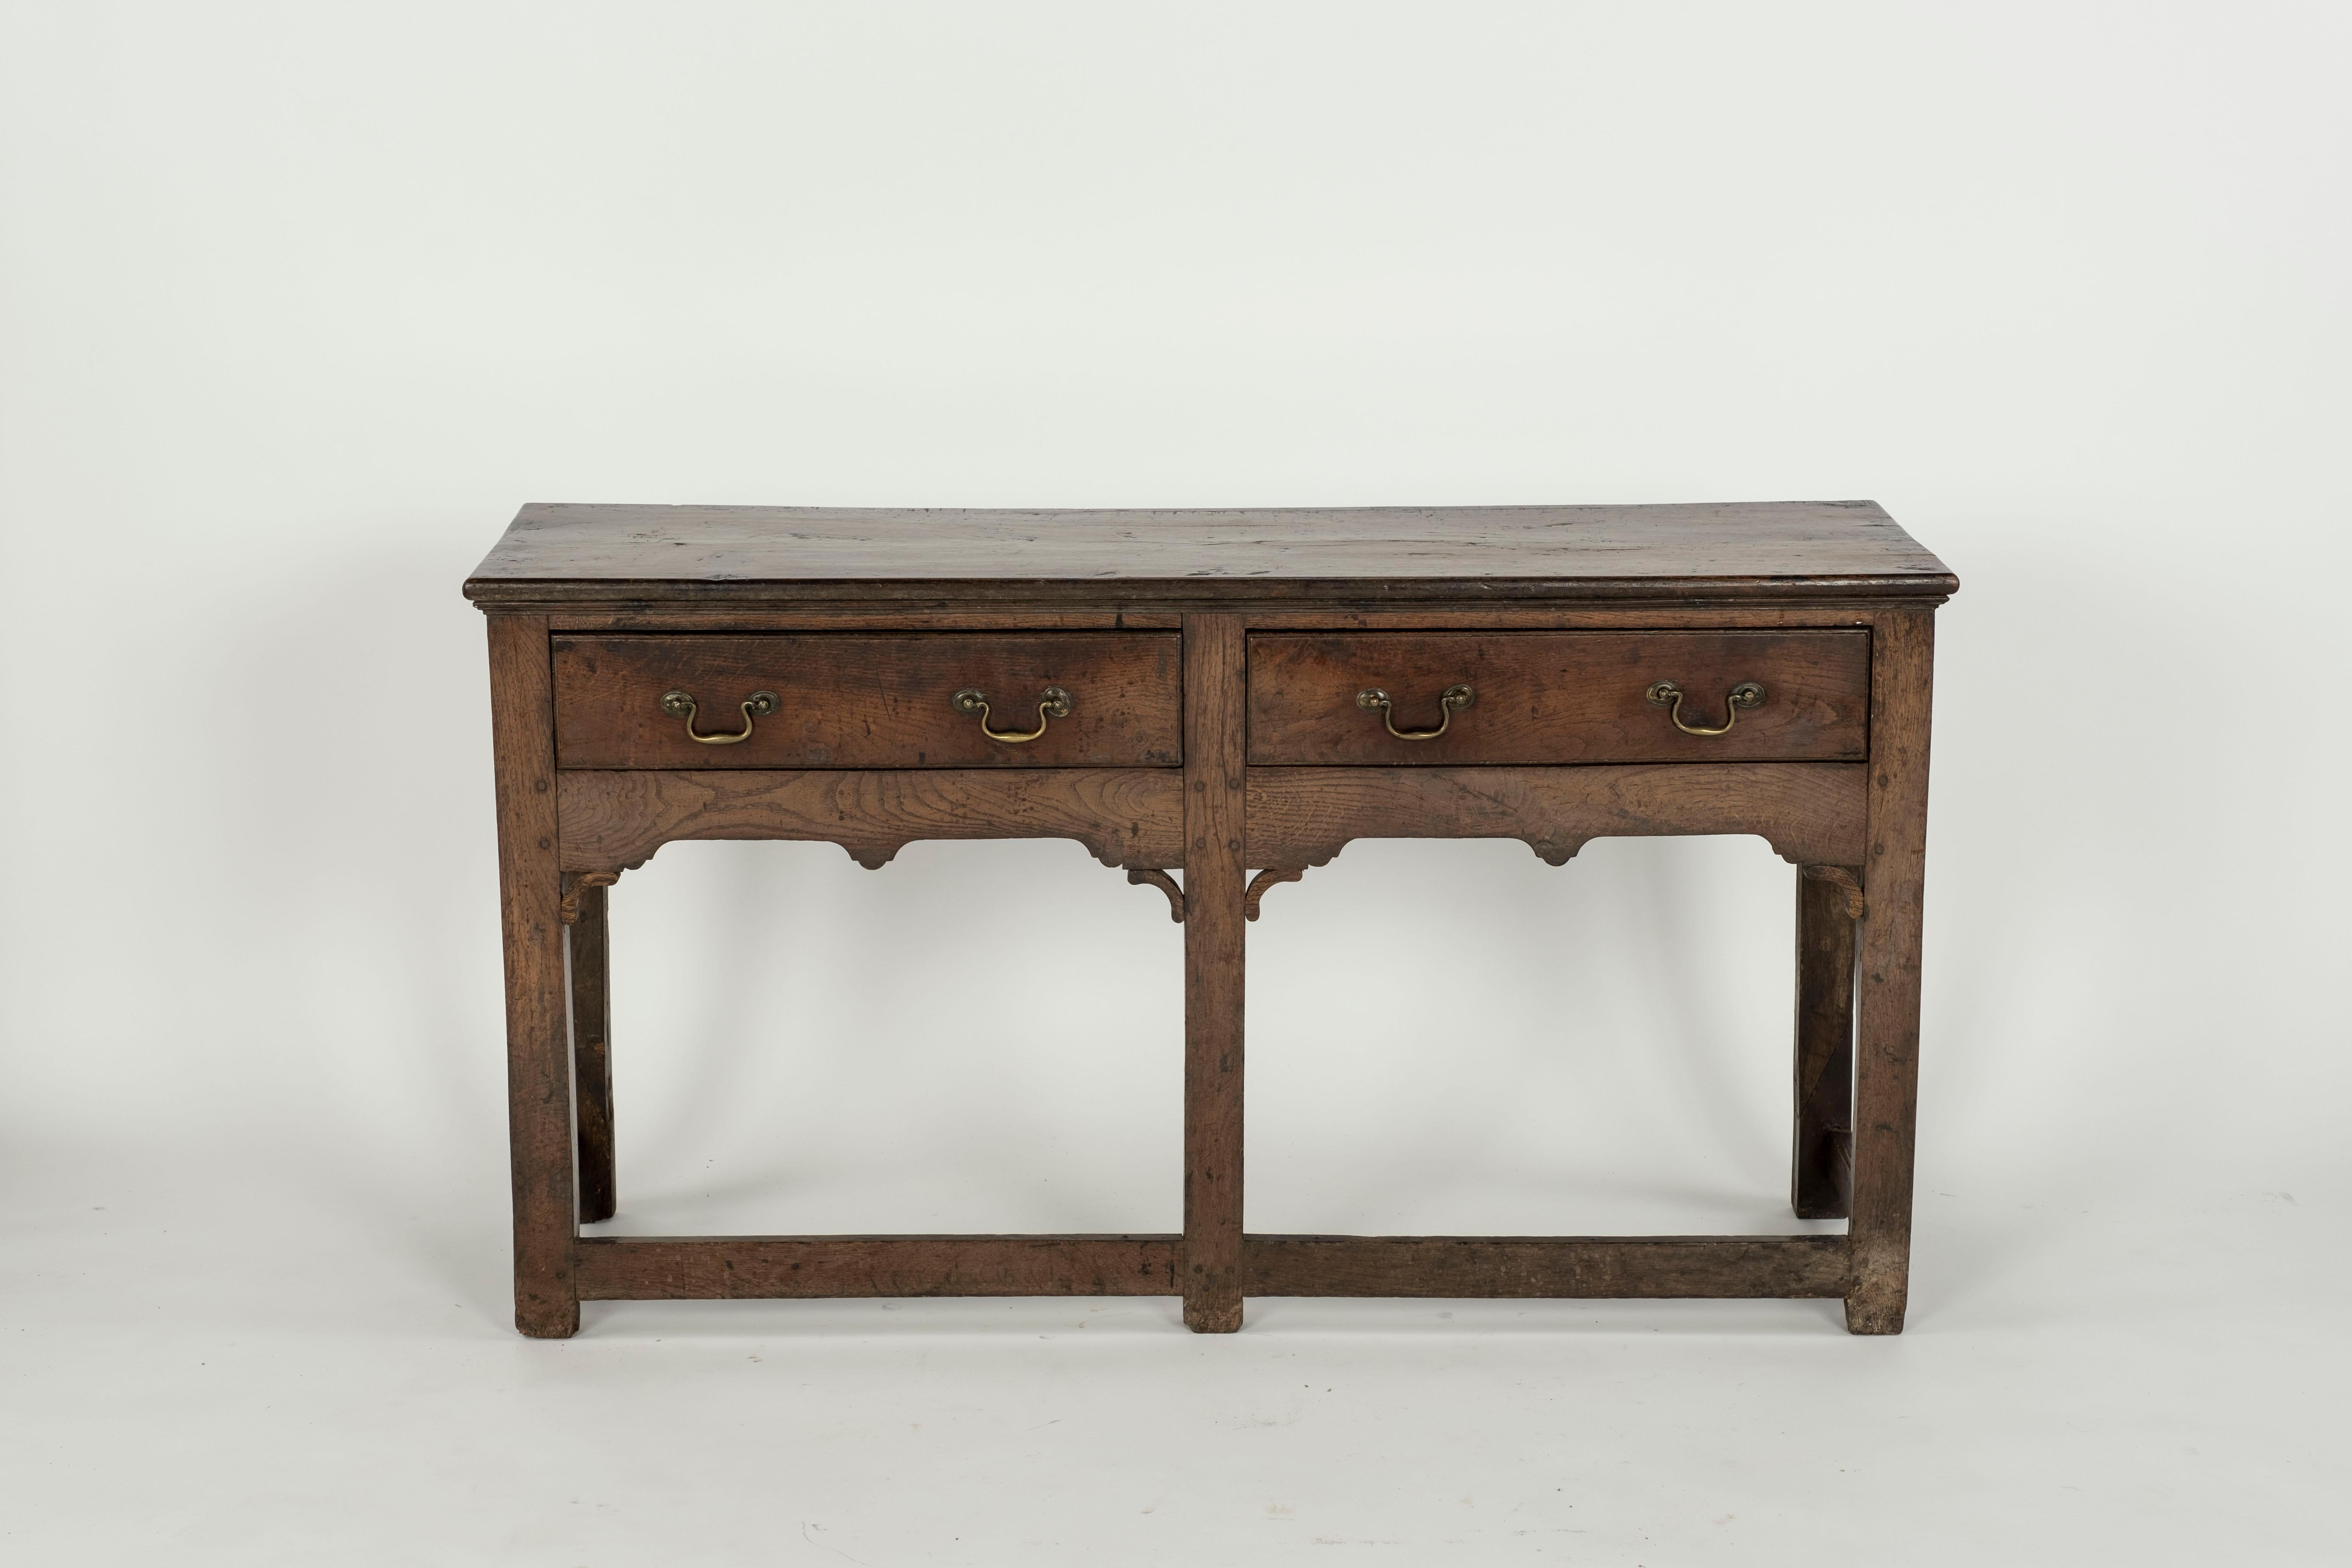 18th Century oak dresser base with detail in inside front corners. Straight legs.